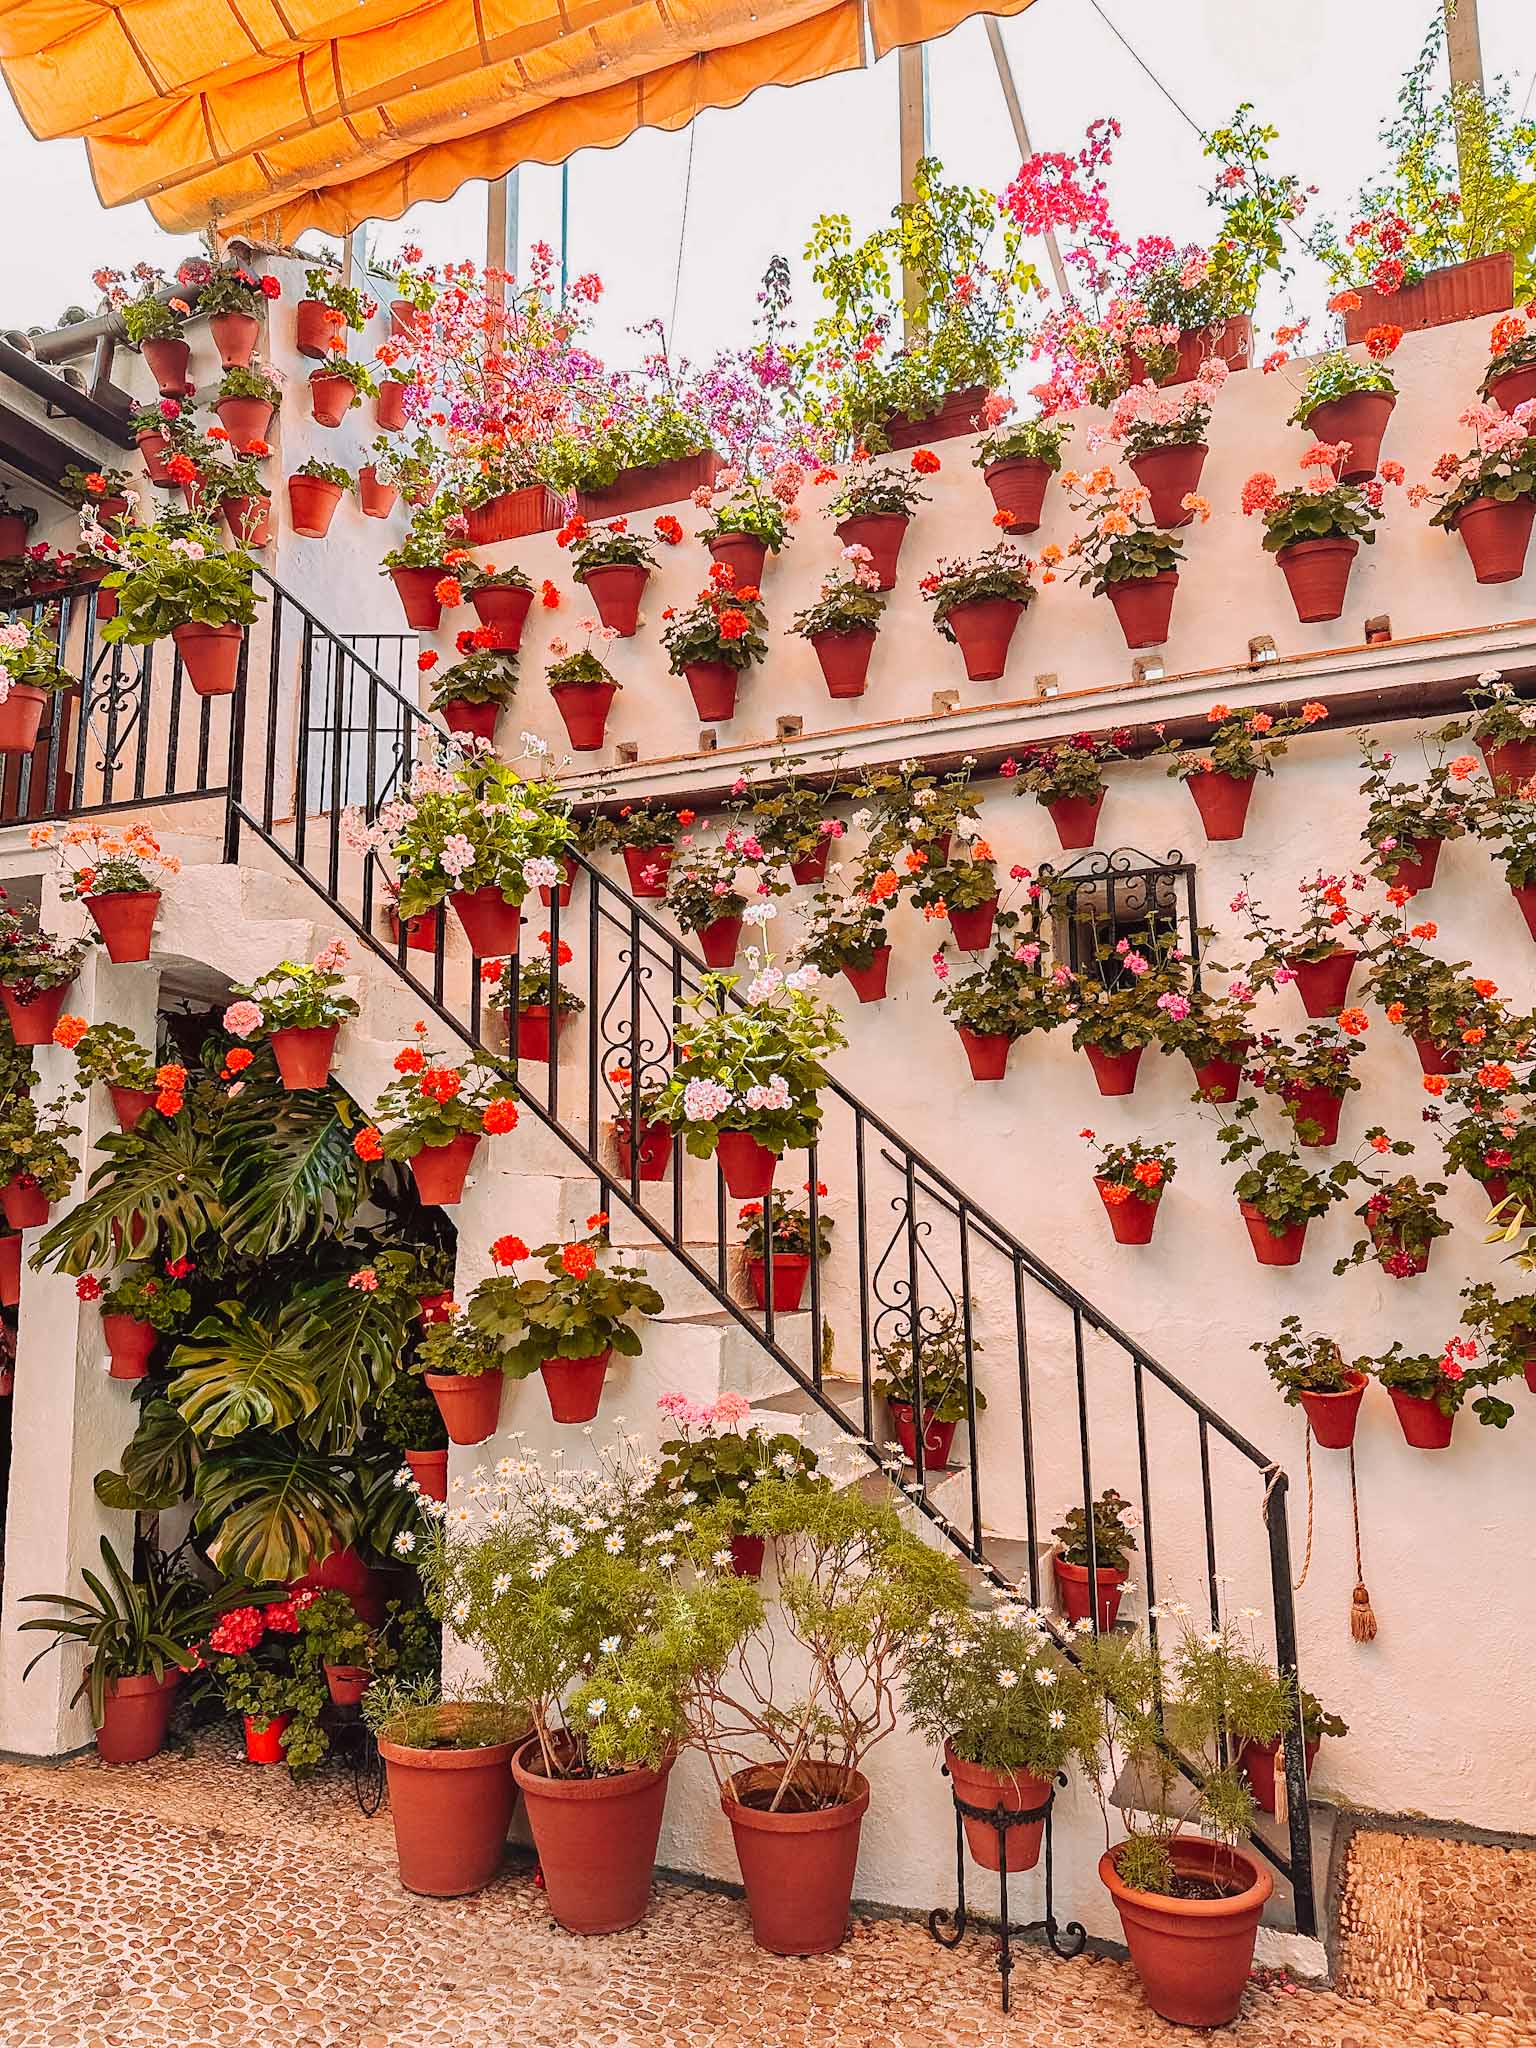 Ruta de los Patios de Cordoba - best Instagram spots of flower patios in Cordoba, Spain